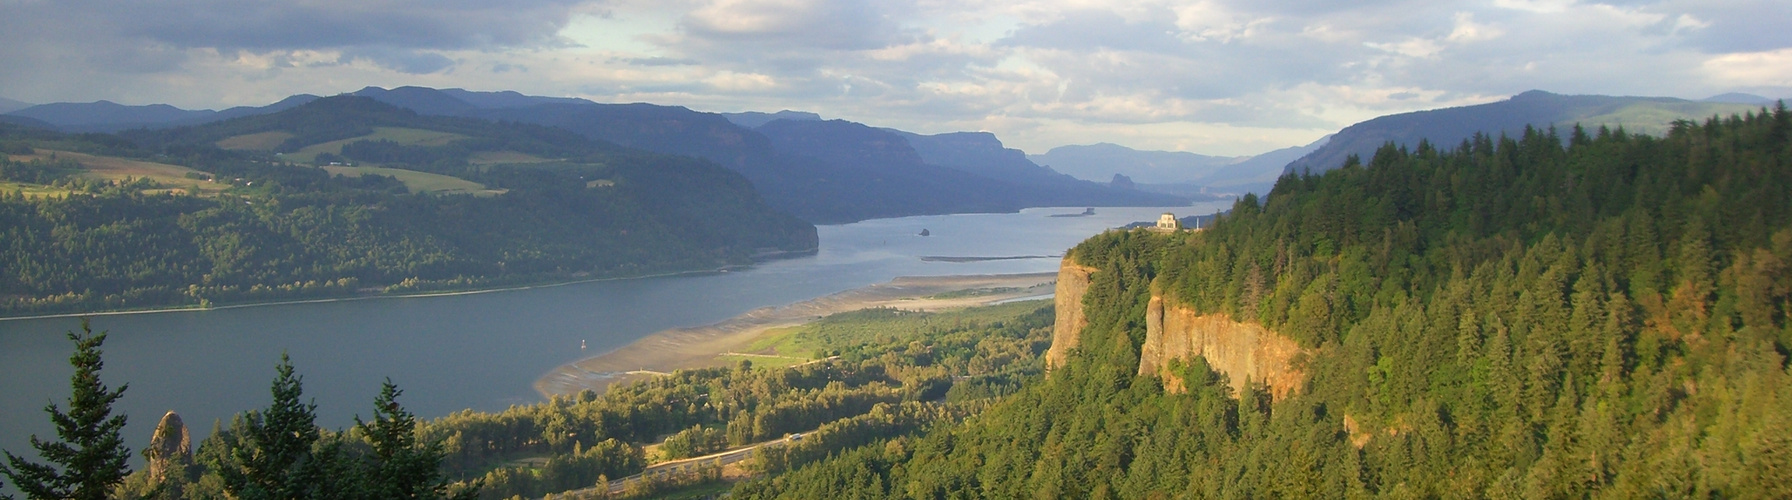 Columbia River Oregon/Washington